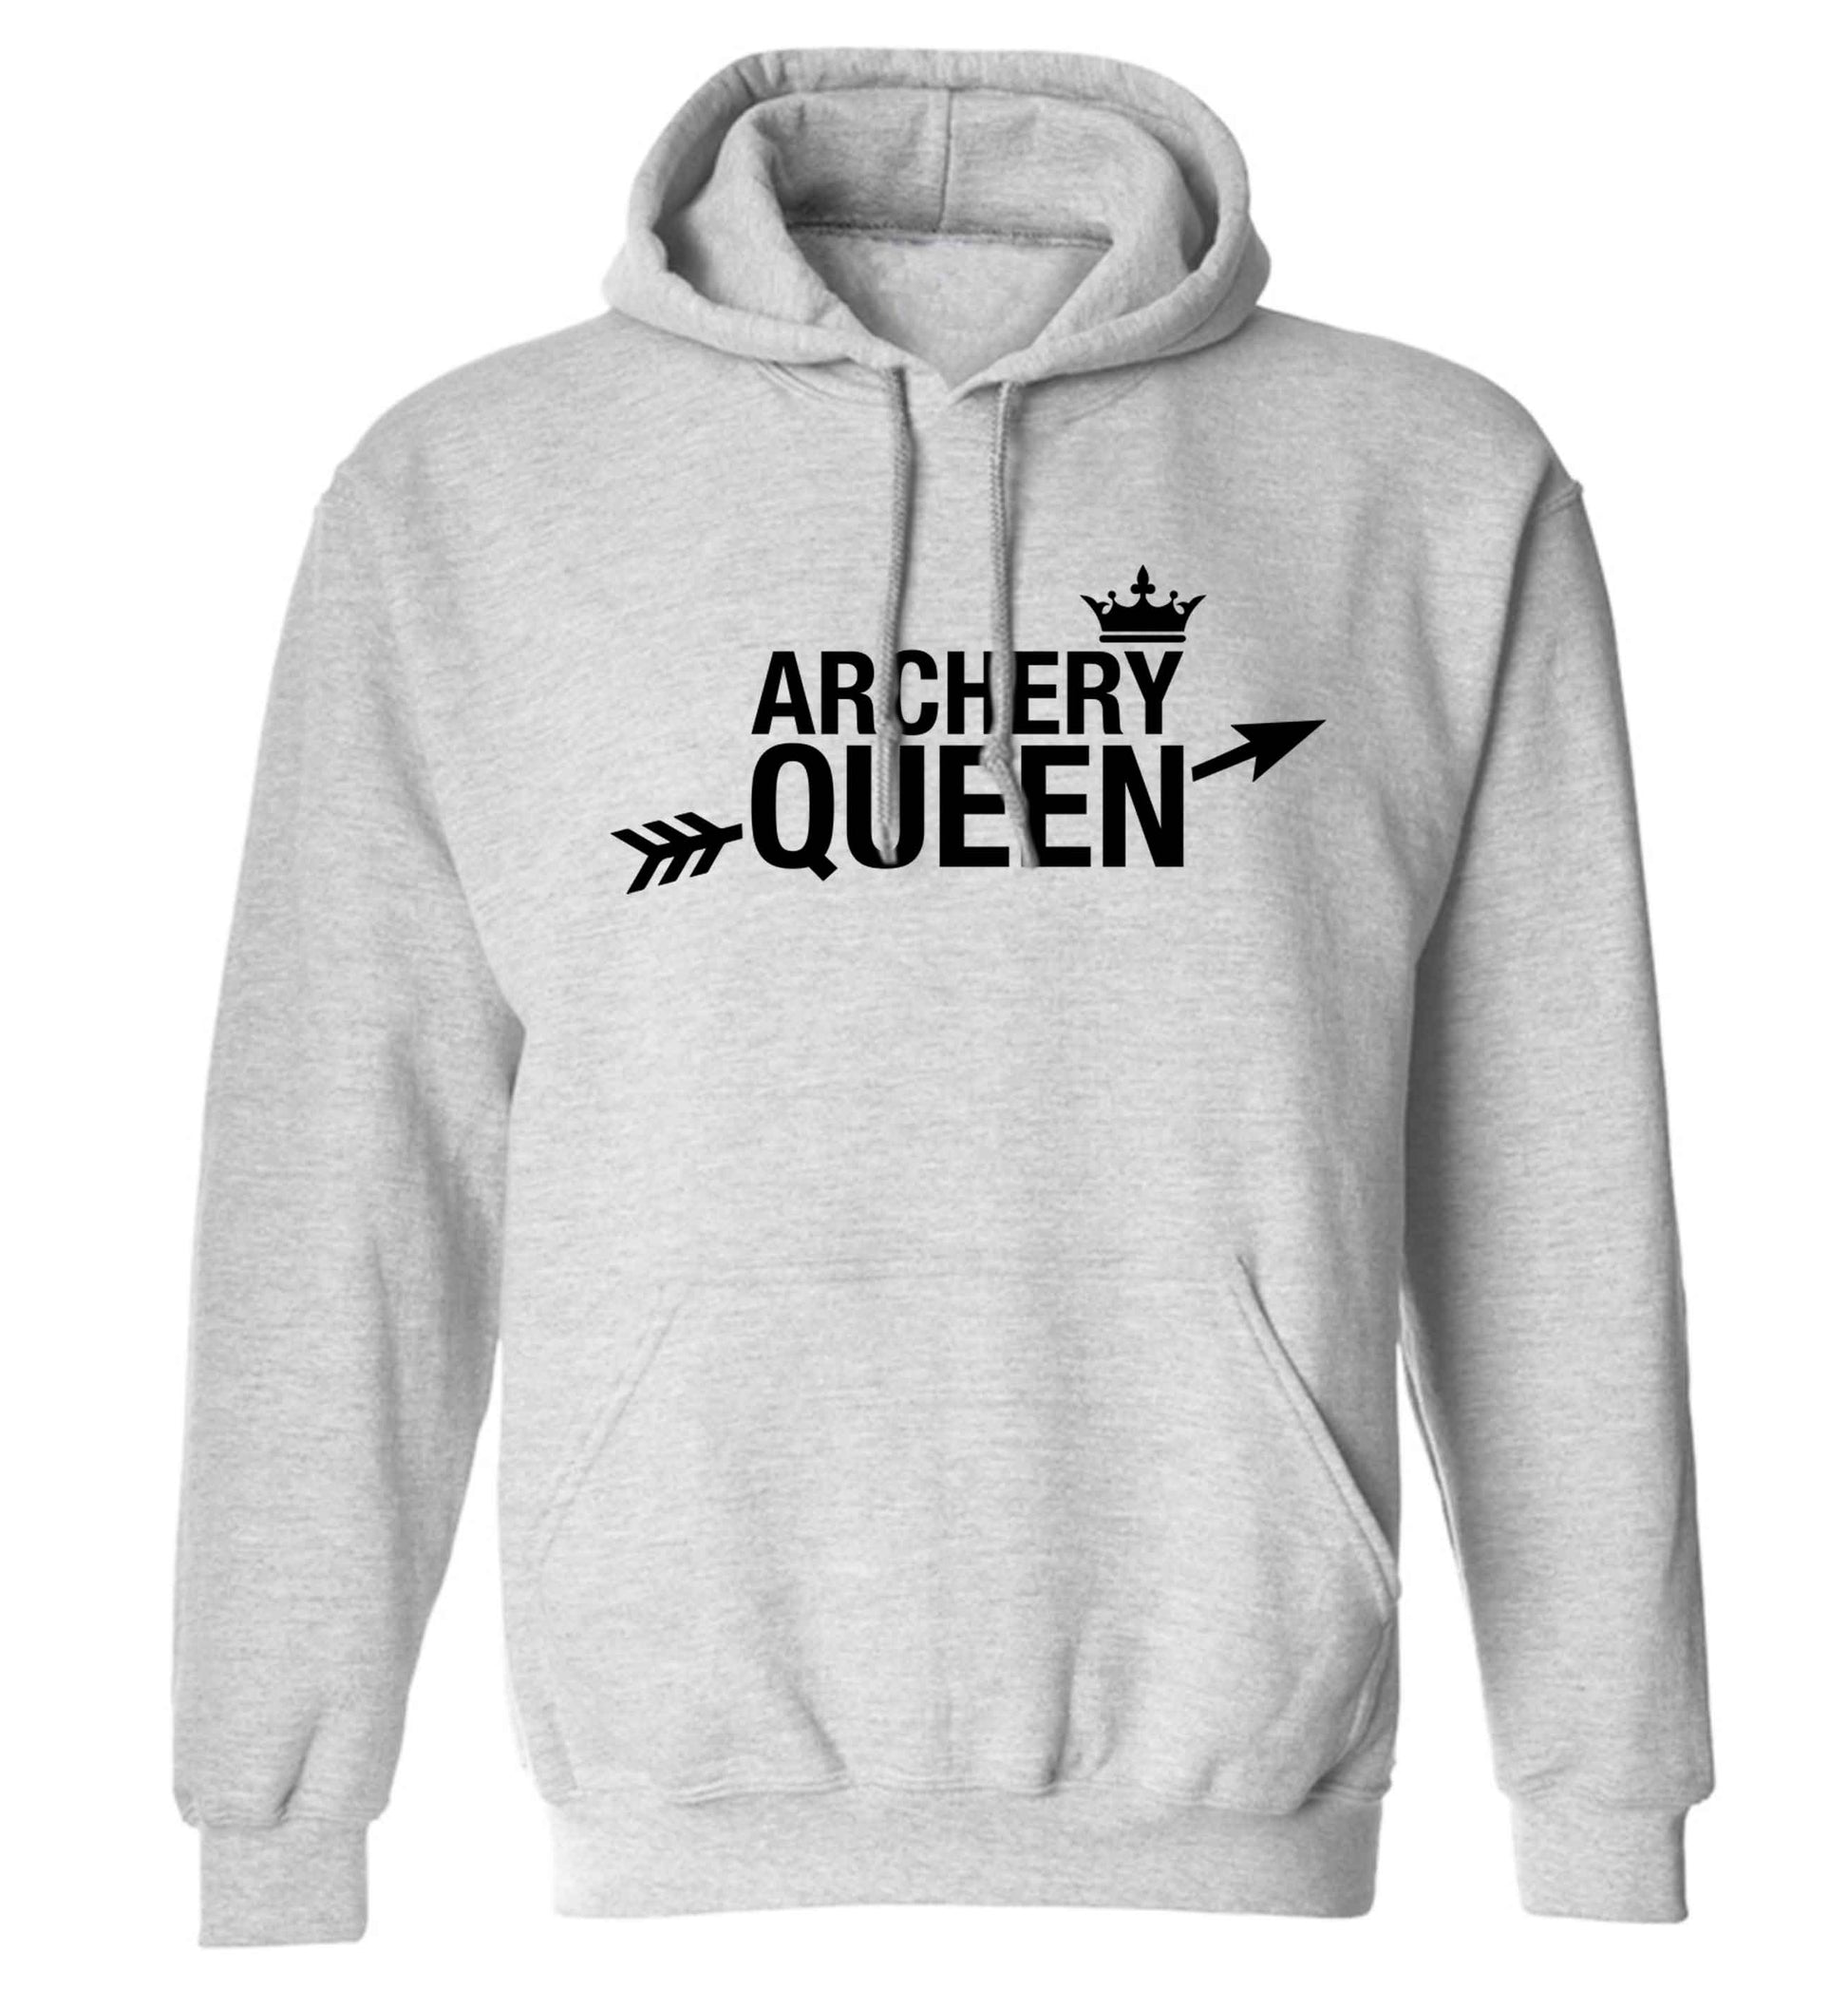 Archery queen adults unisex grey hoodie 2XL